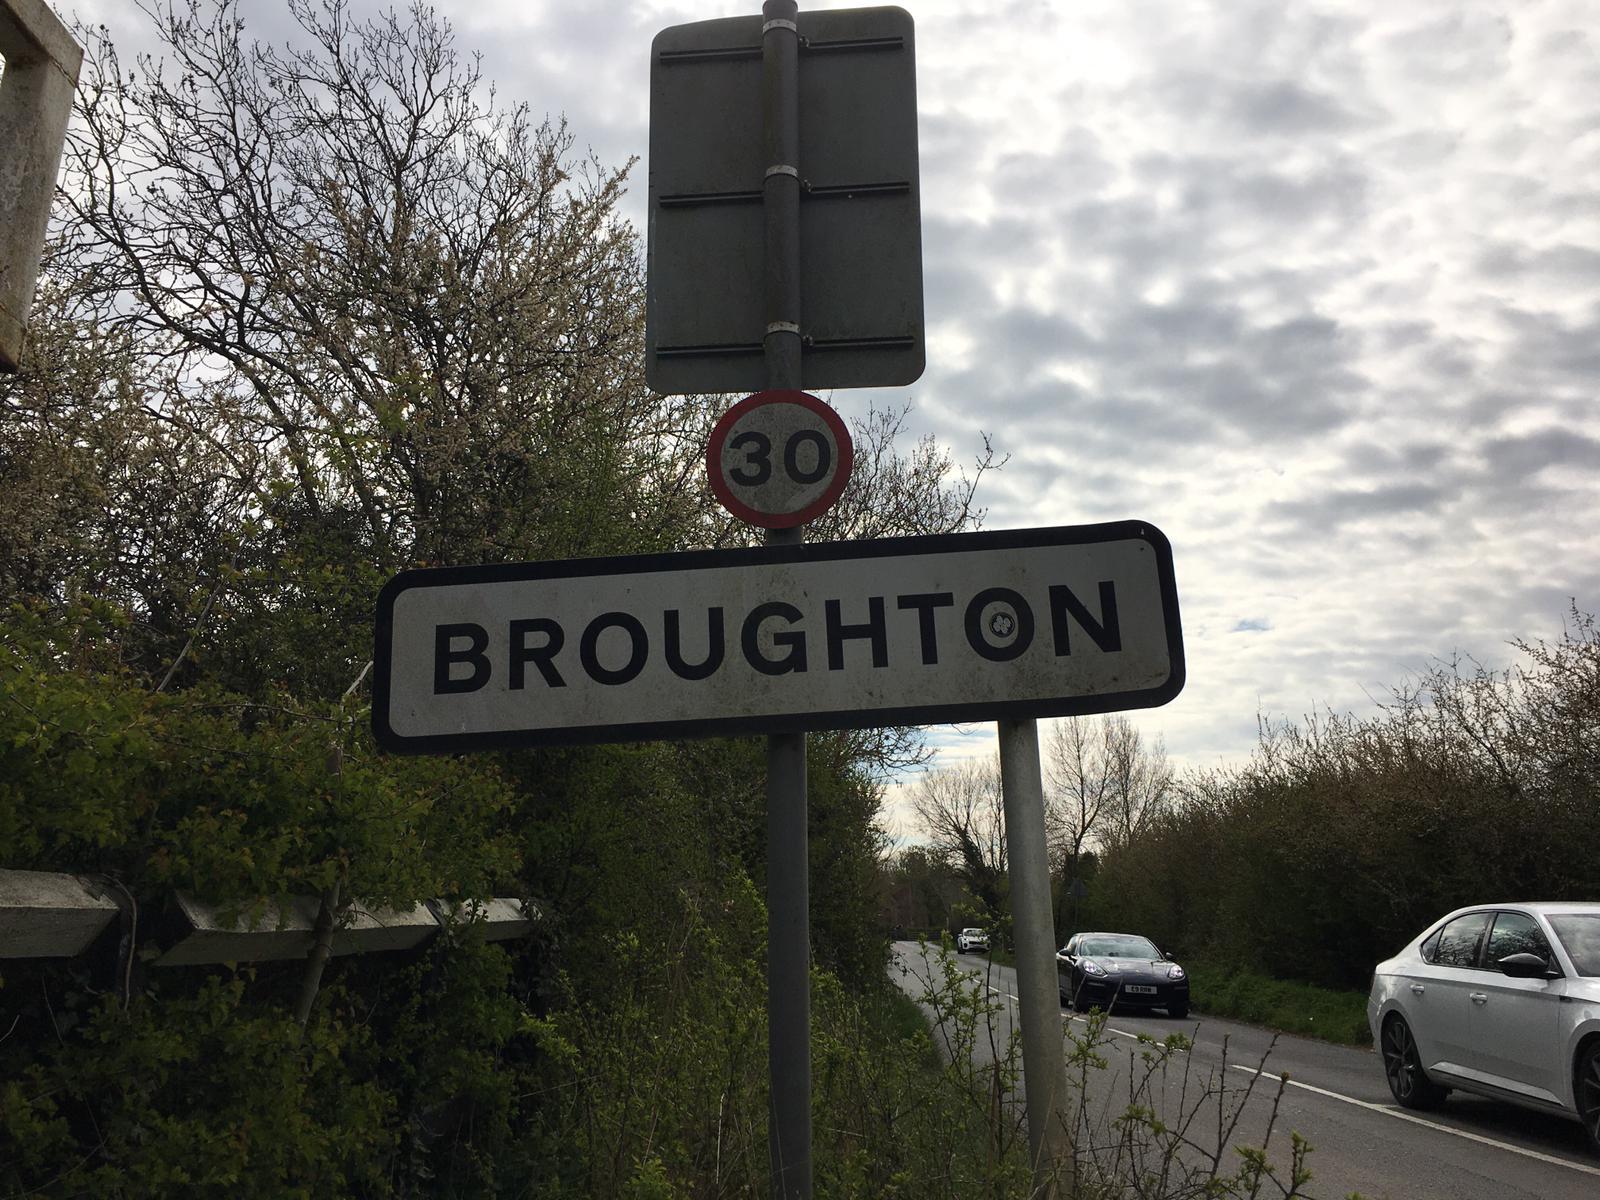 The crime scene happened in Broughton 